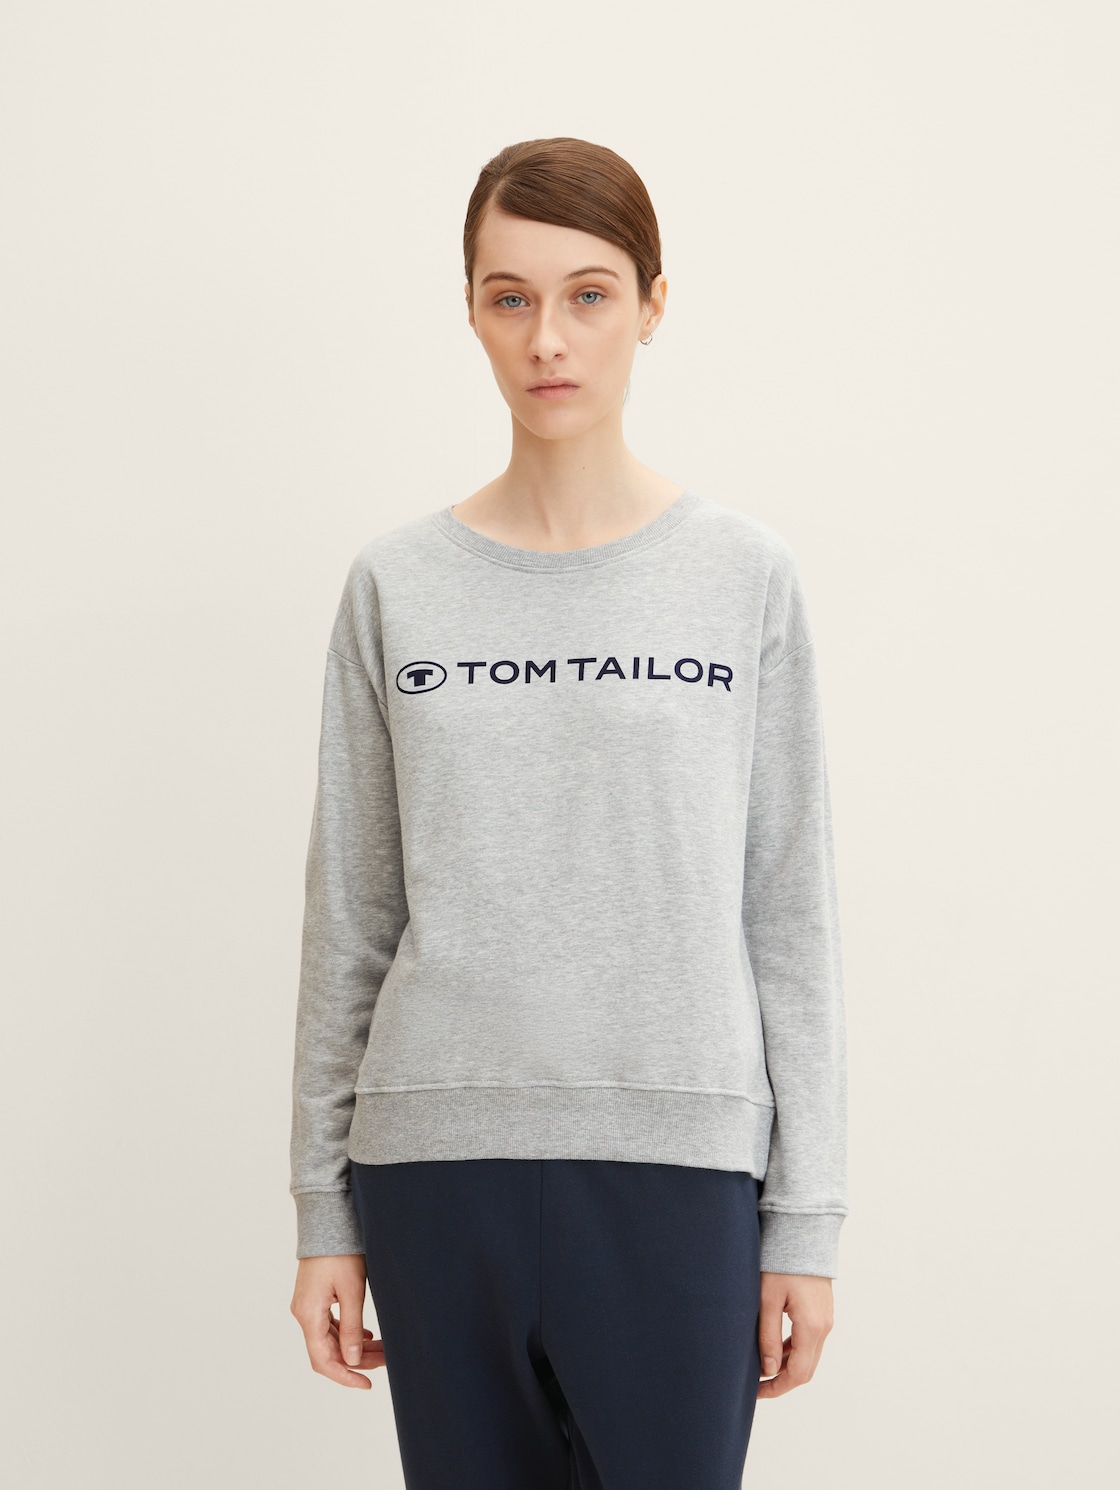 TOM TAILOR Damen Sweatshirt mit Logo-Print, grau, Gr. 36,